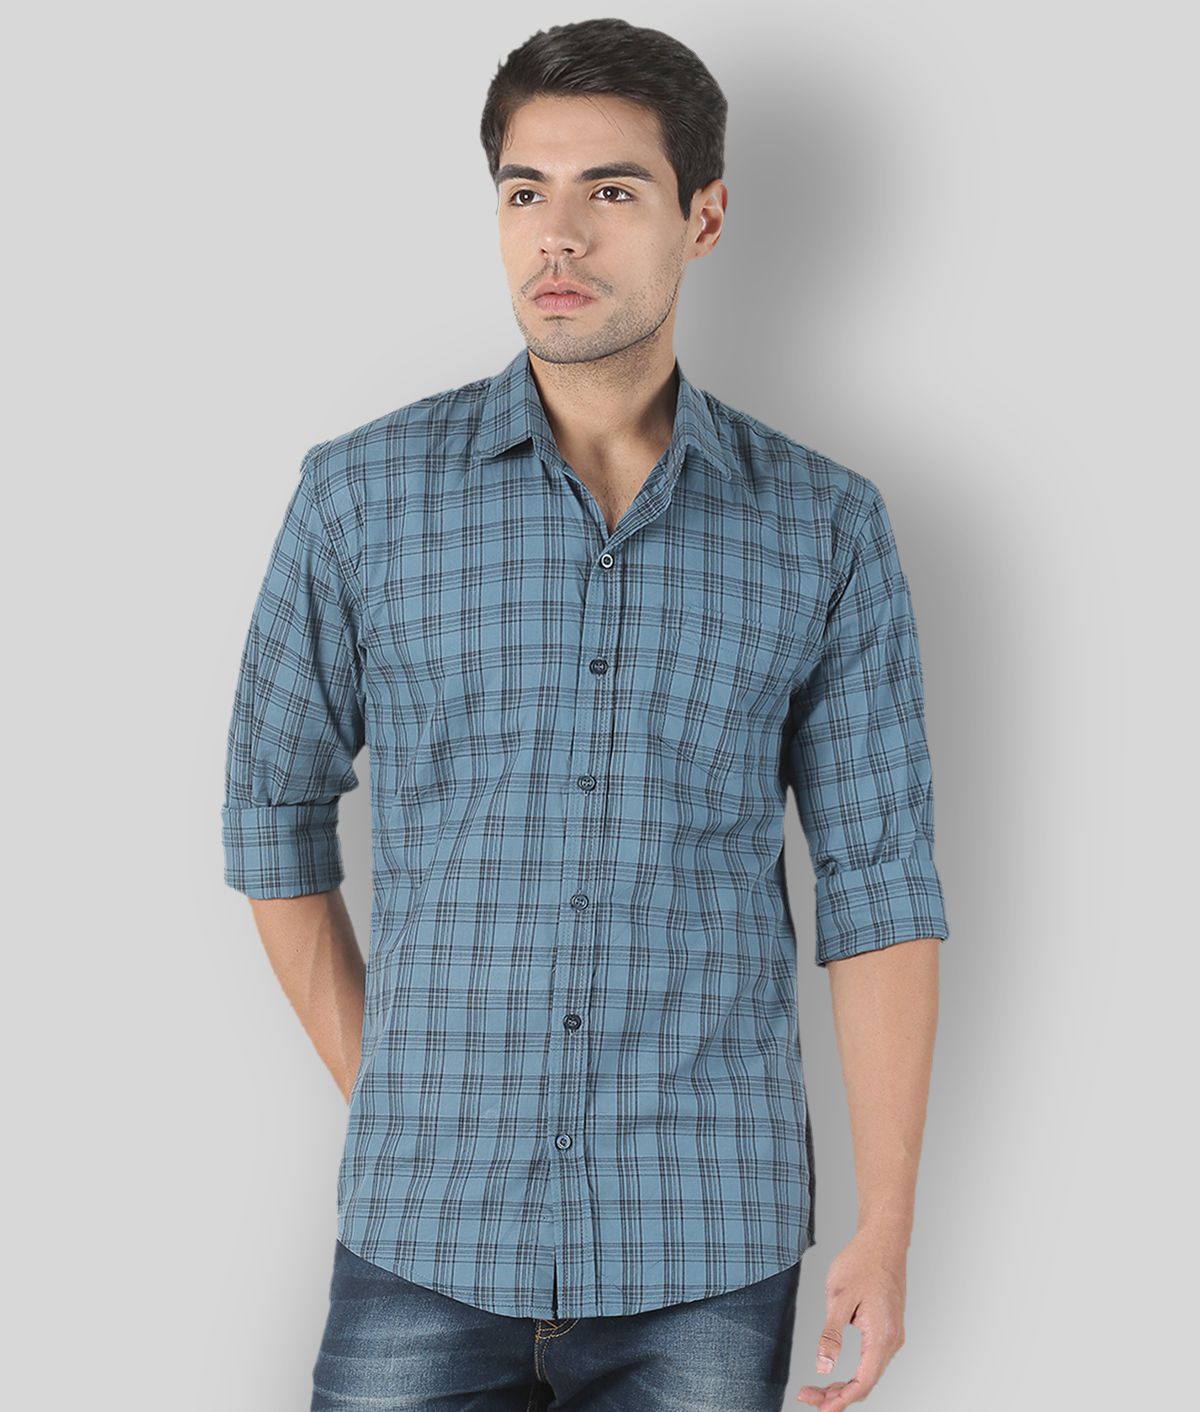     			YHA - Light Blue Cotton Regular Fit Men's Casual Shirt (Pack of 1 )